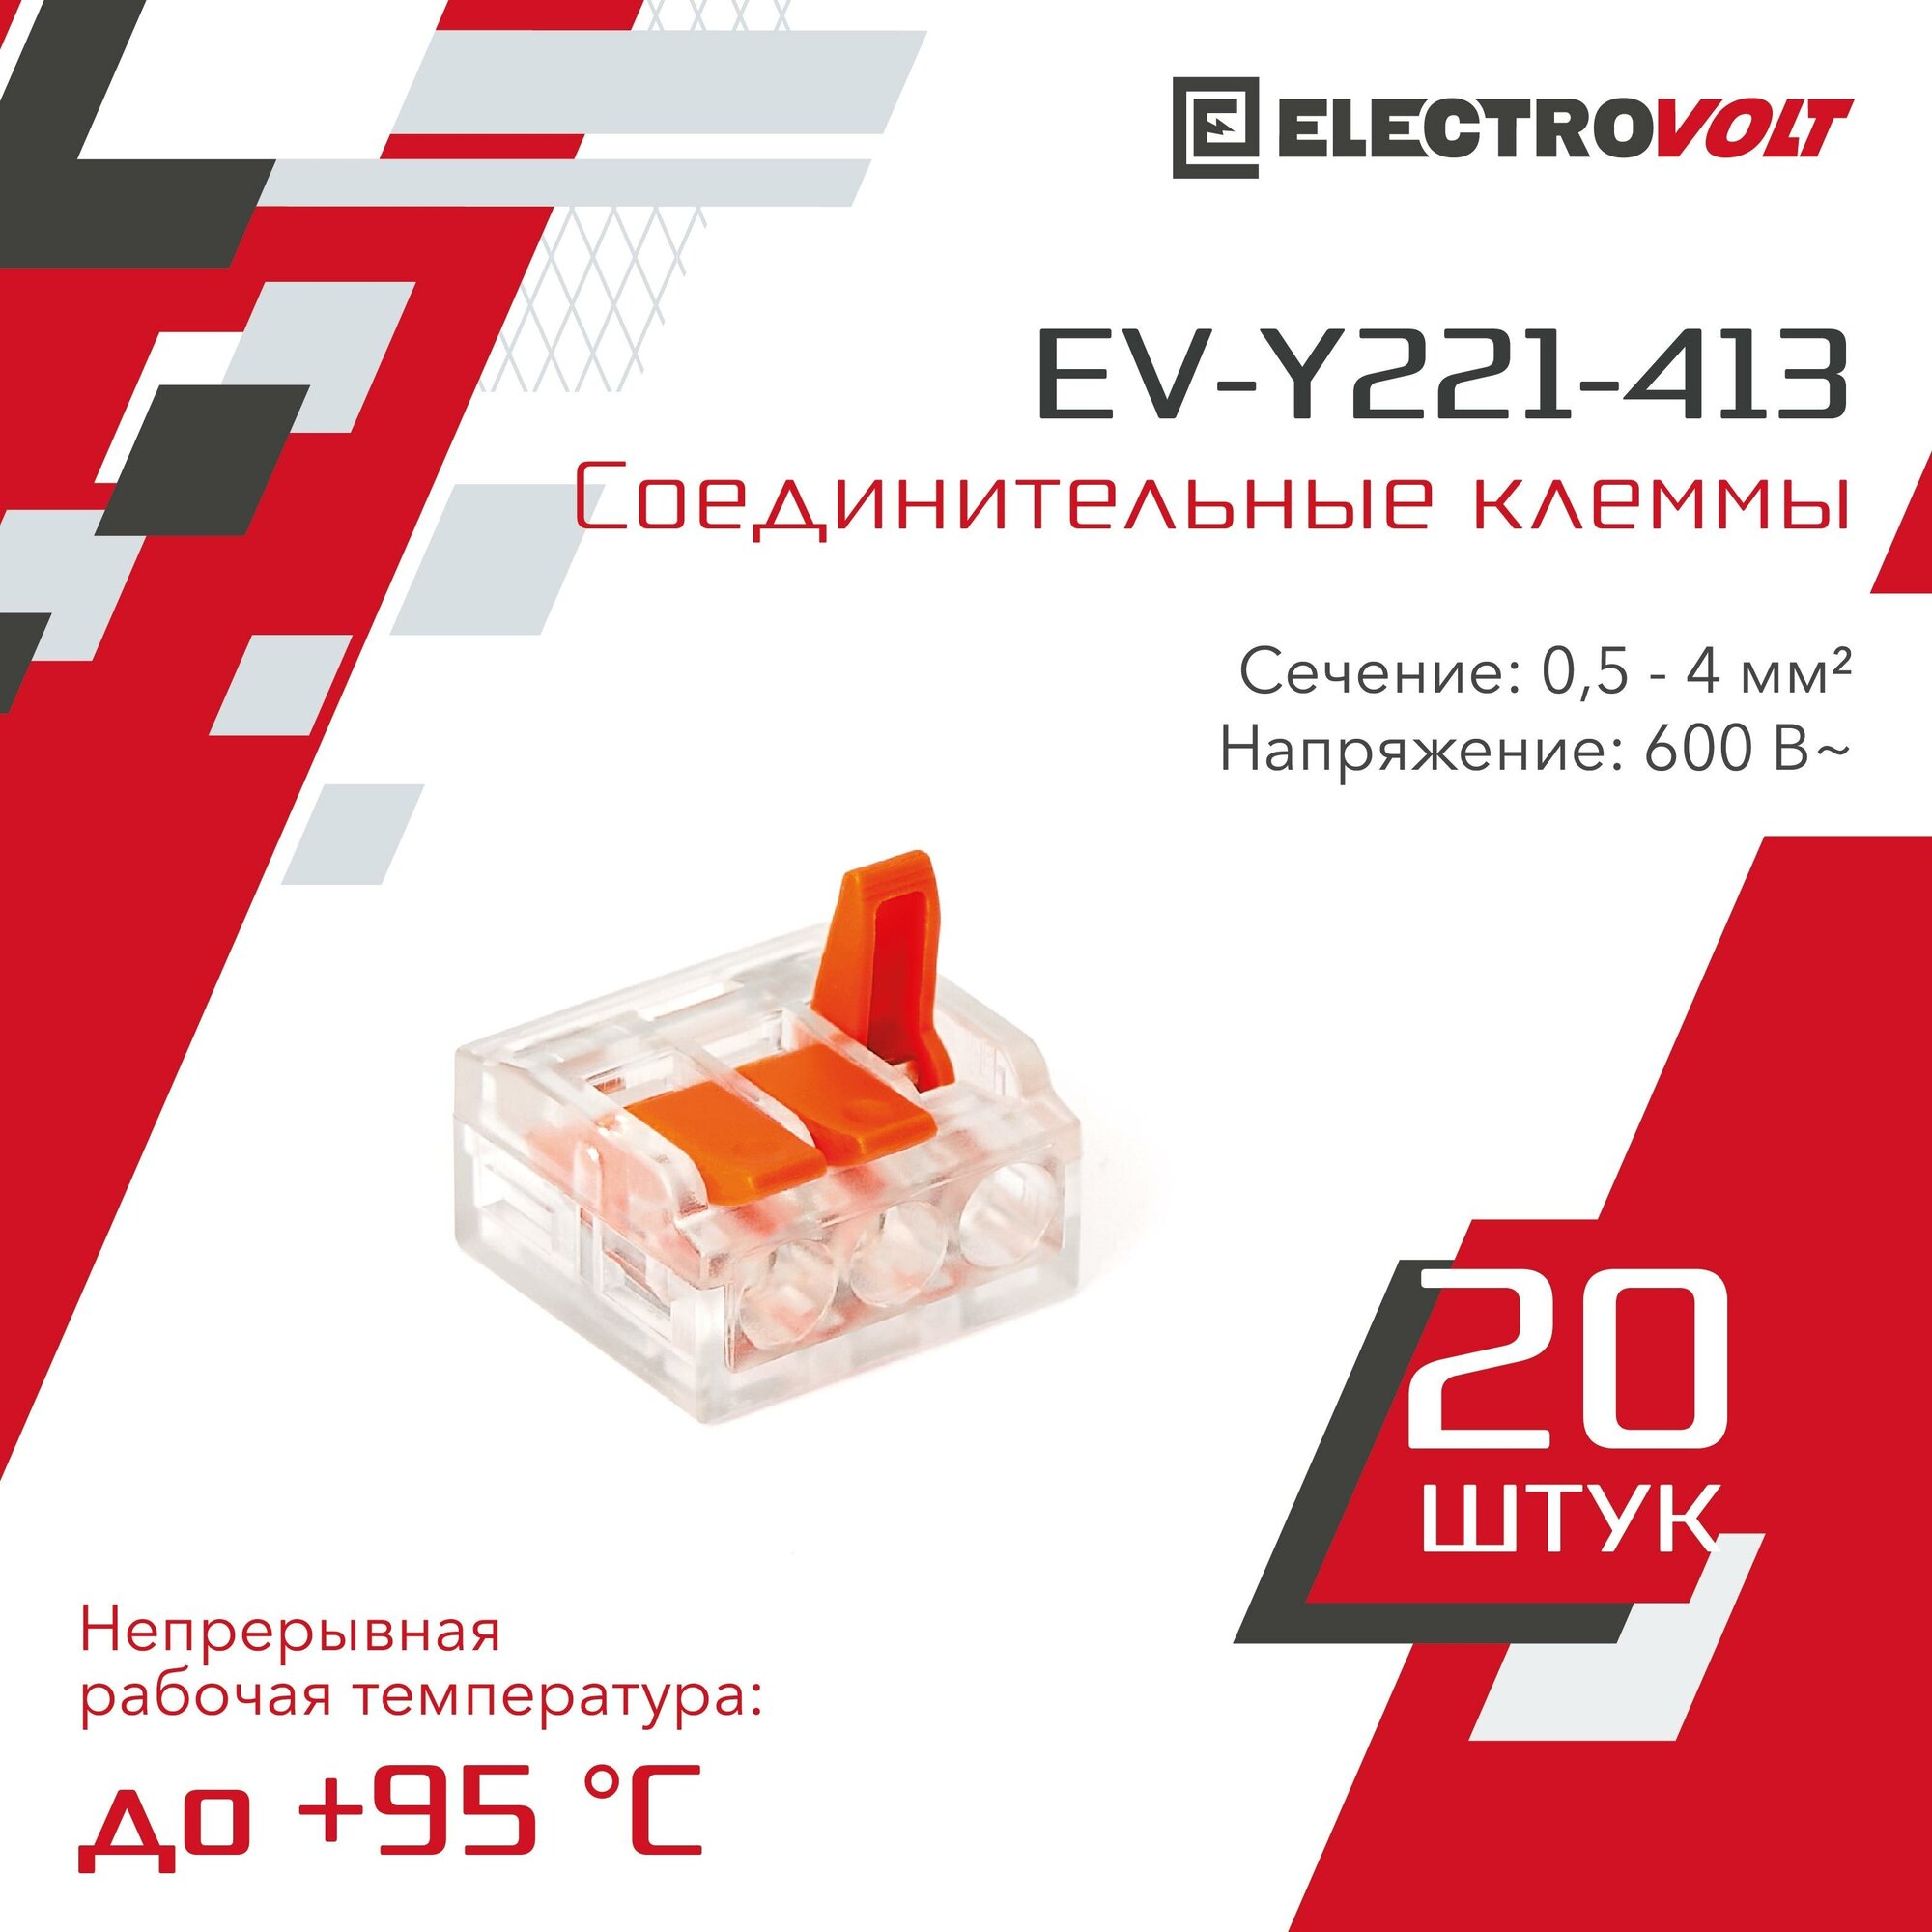 Клемма ELECTROVOLT EV-Y221-413, 20 шт., блистер, прозрачный/оранжевый